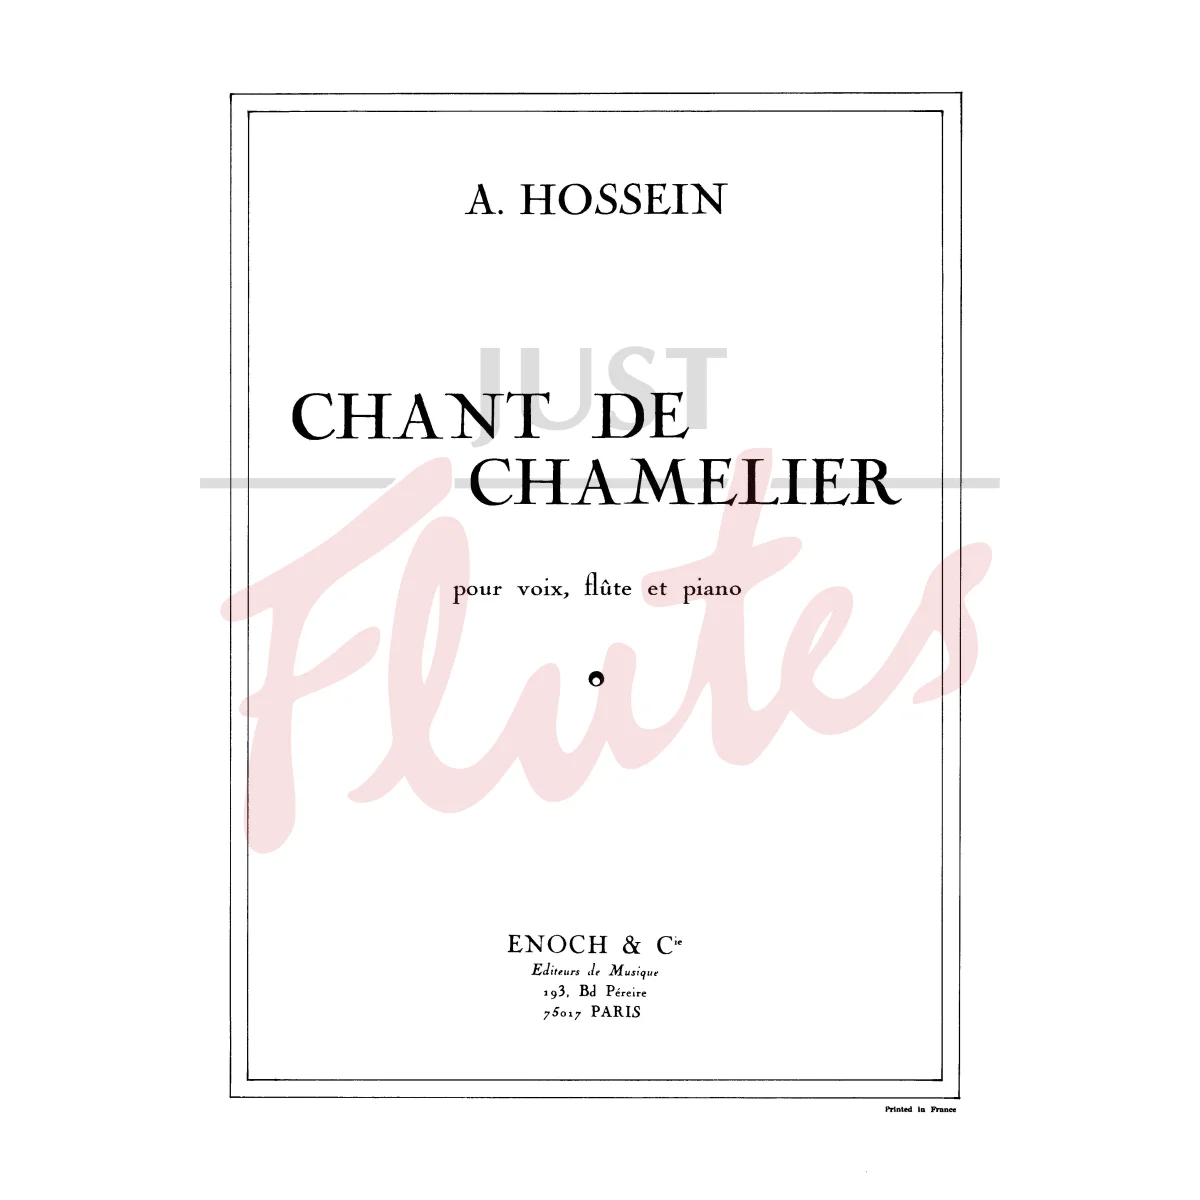 Chant de Chamelier for Flute, Voice and Piano